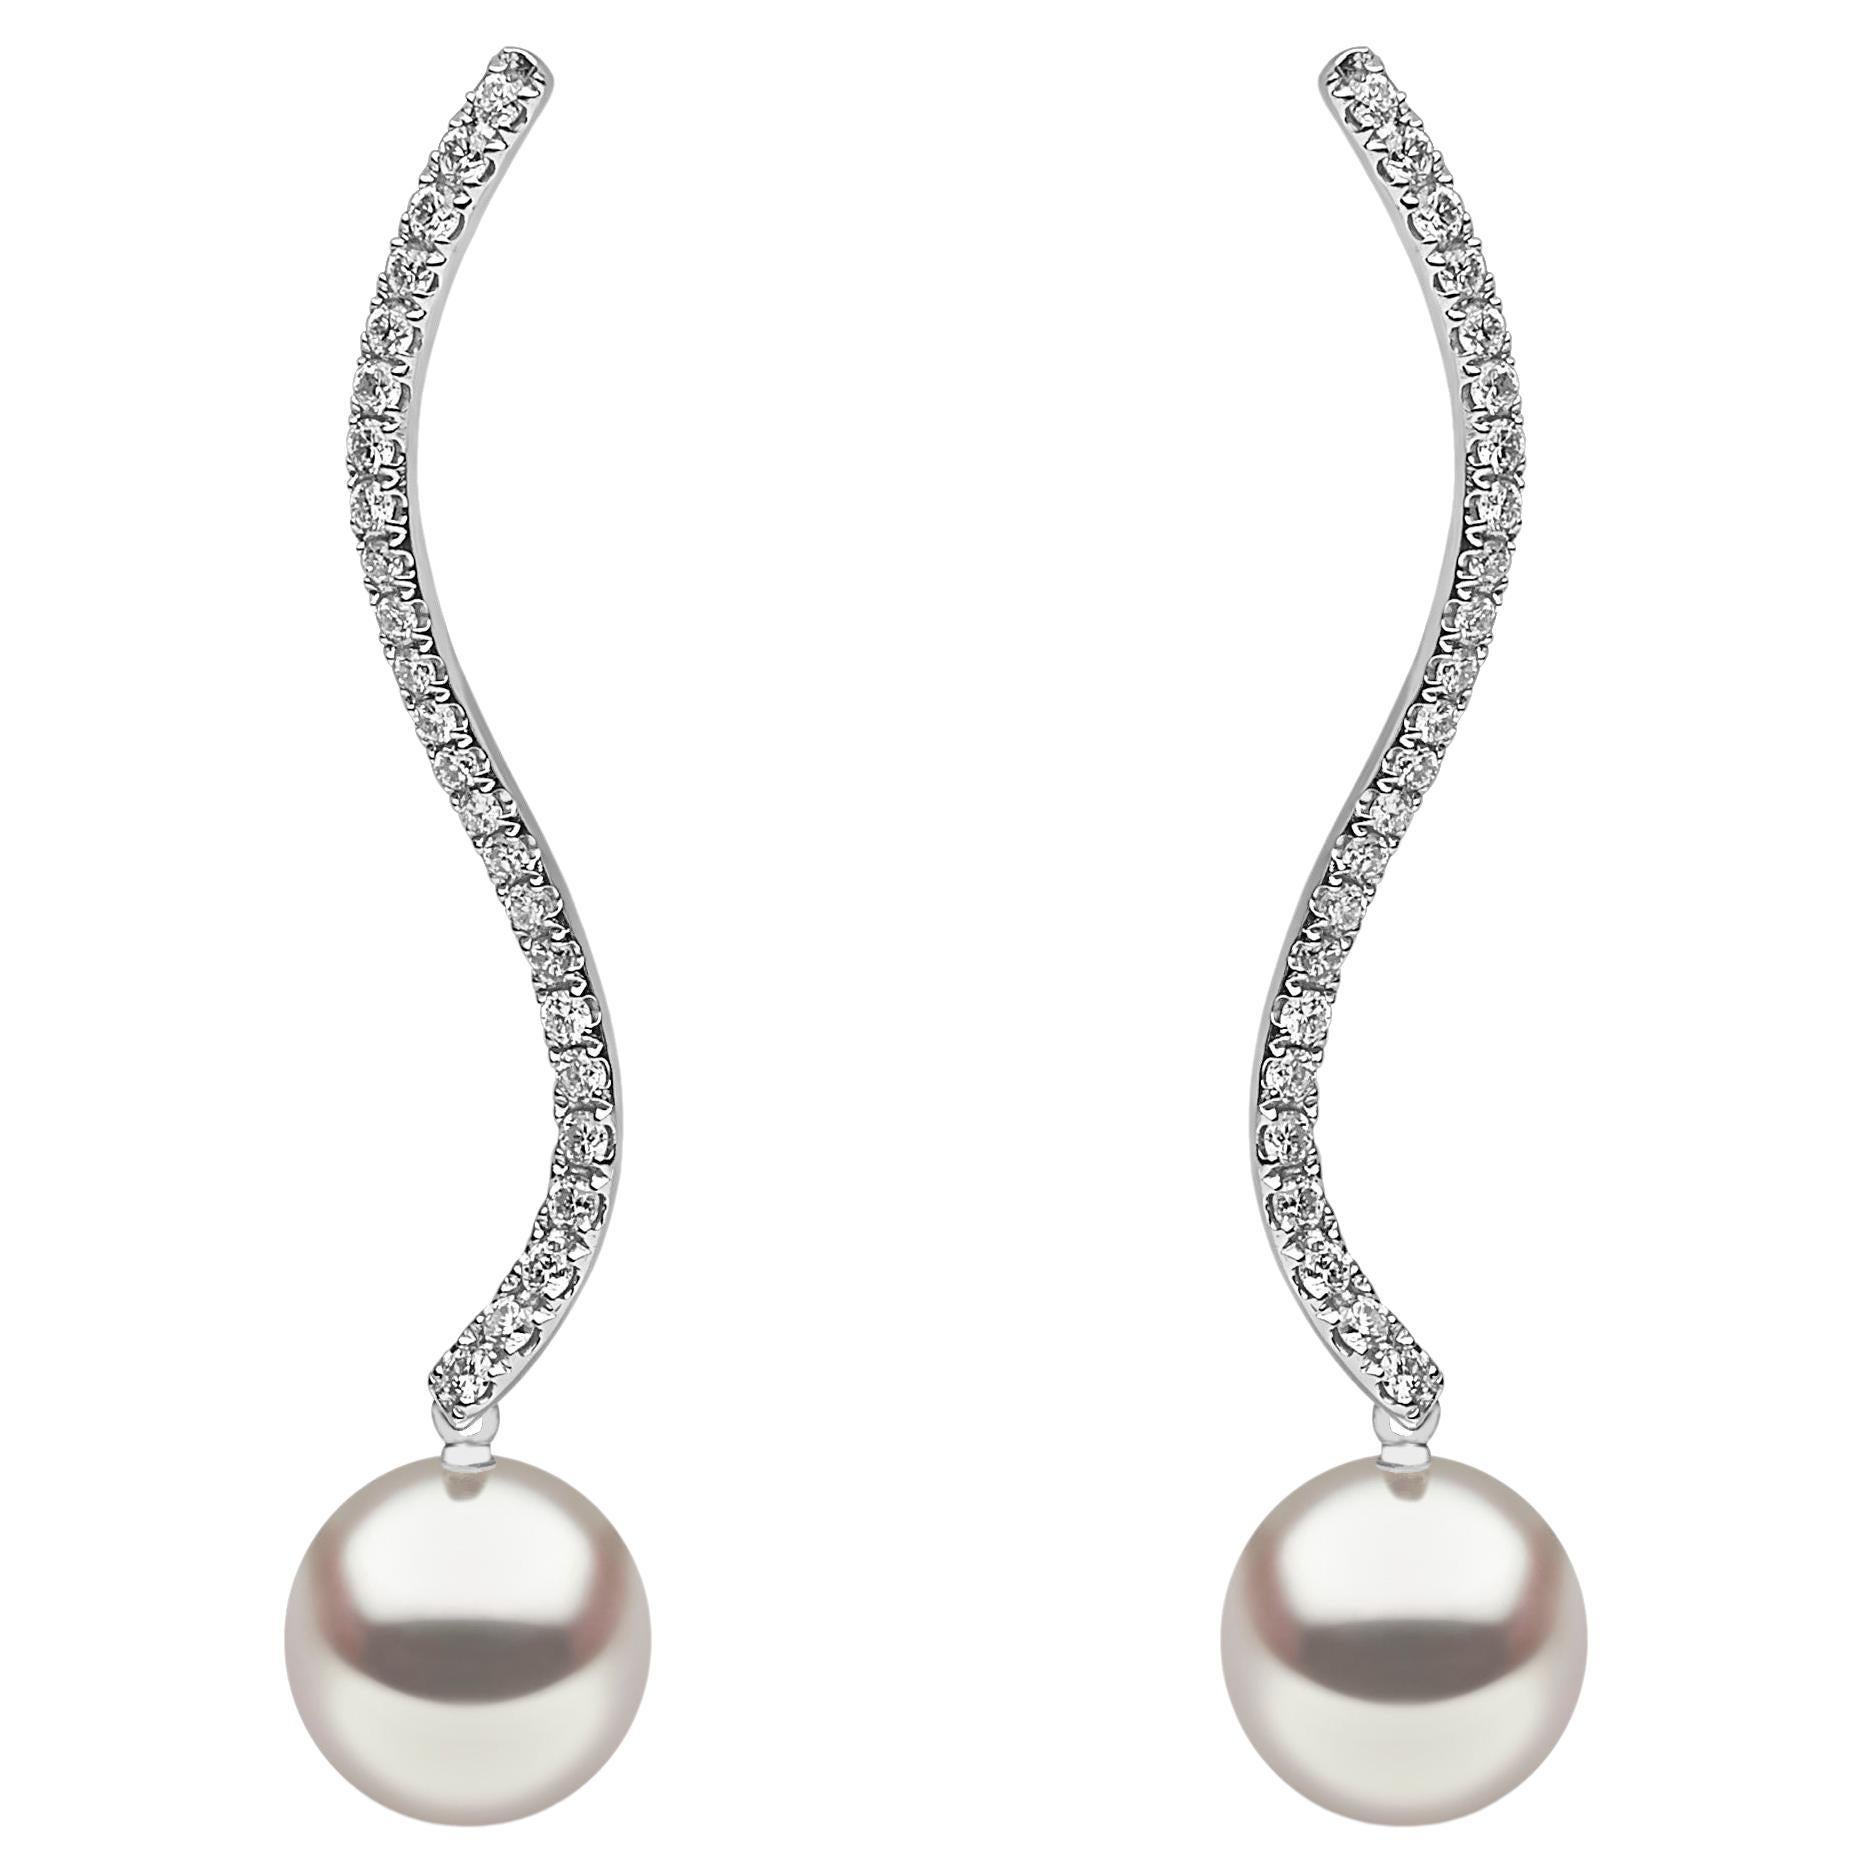 Yoko London Freshwater Pearl and Diamond Earrings in 18K White Gold